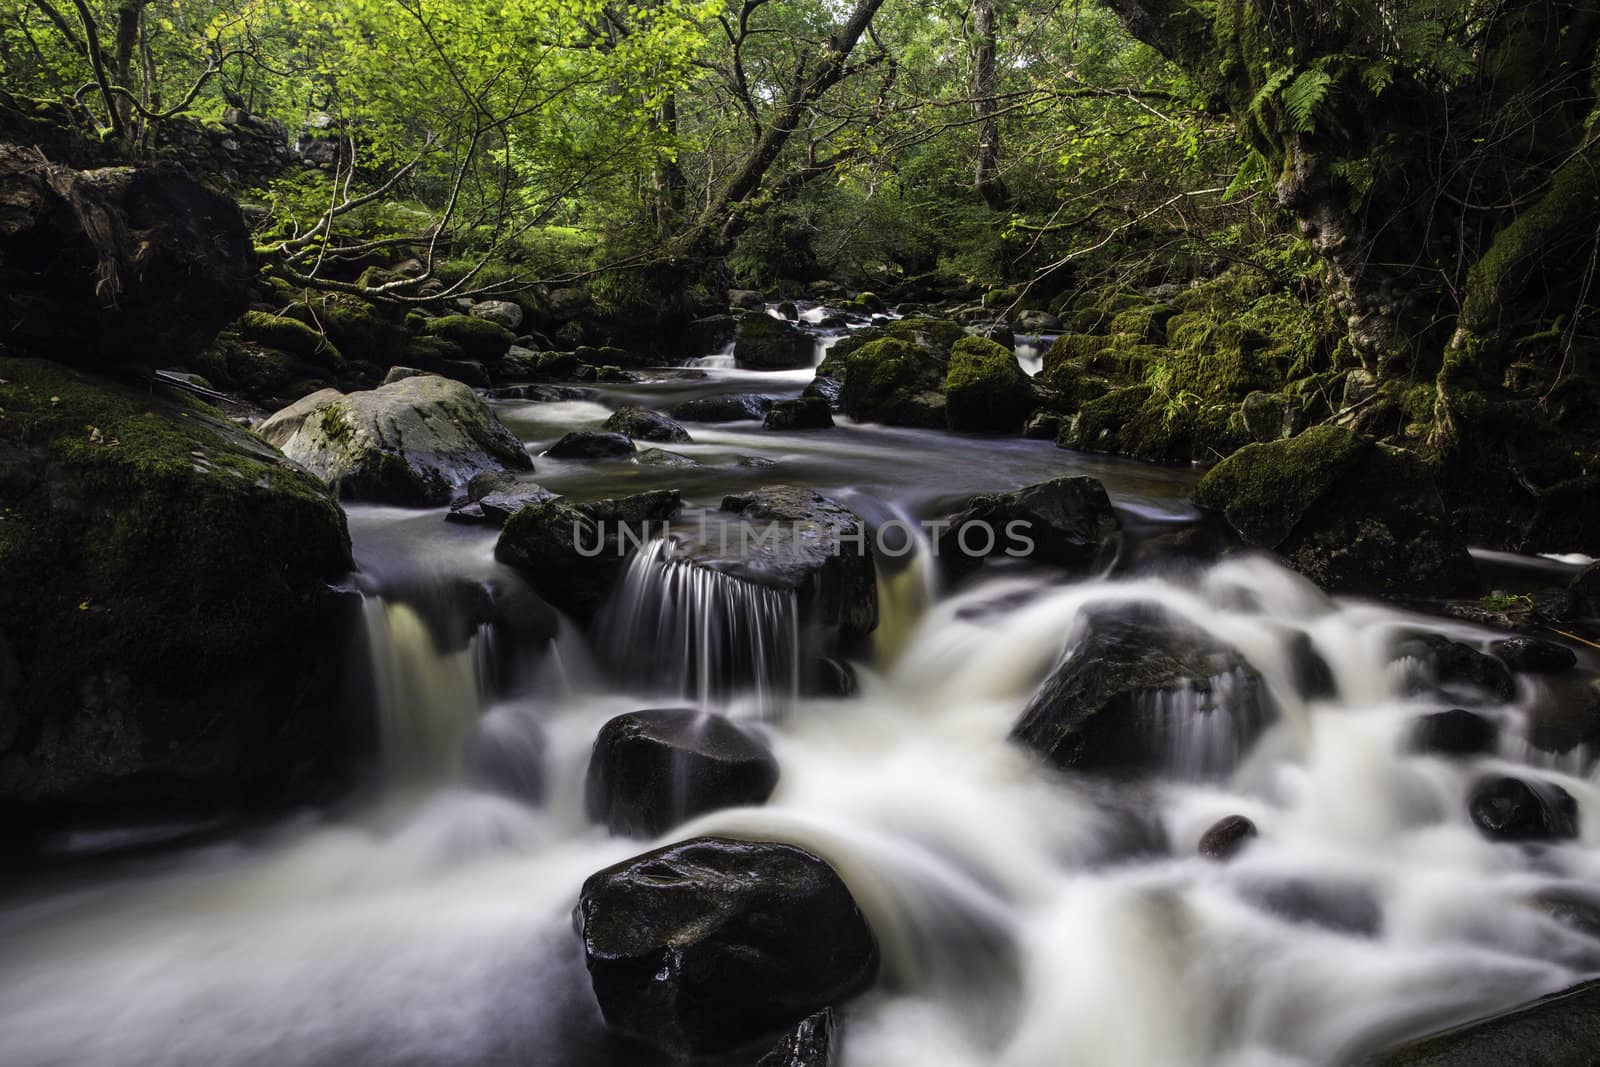 Aira Beck, Lake District, England by jrock635